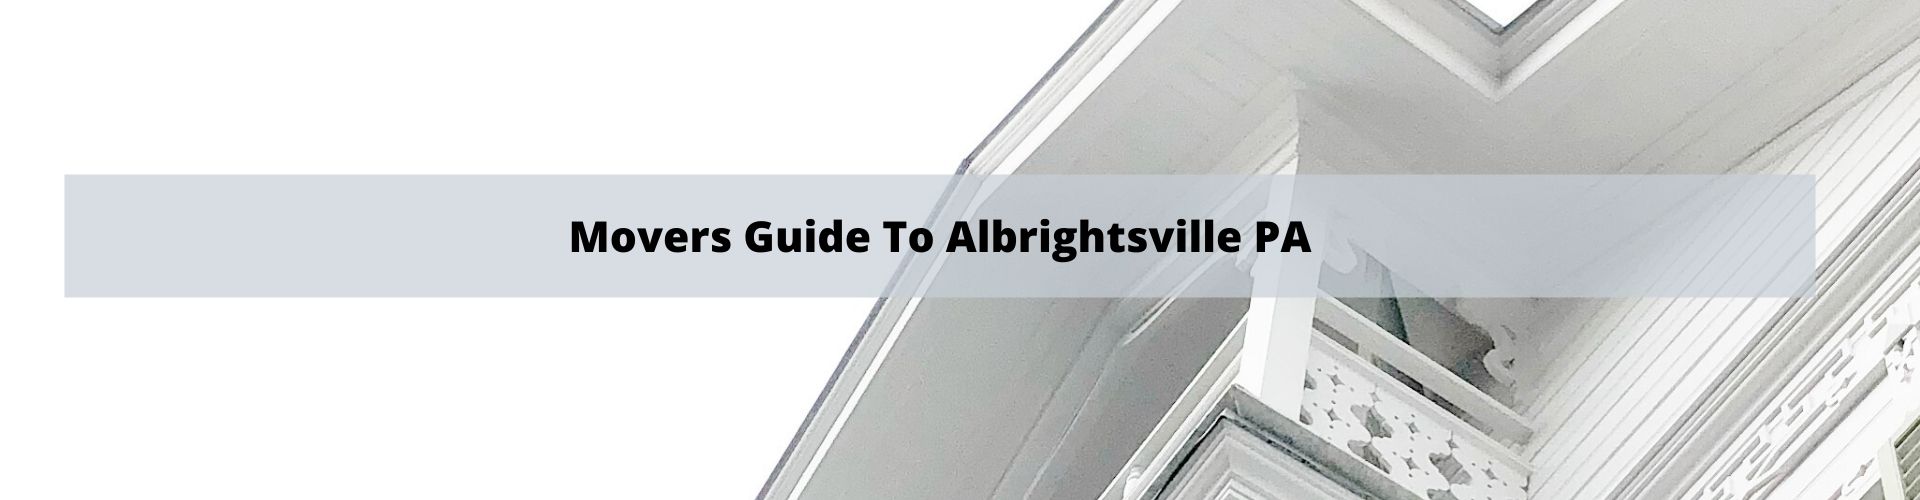 Albrightsville PA Mover's Guide